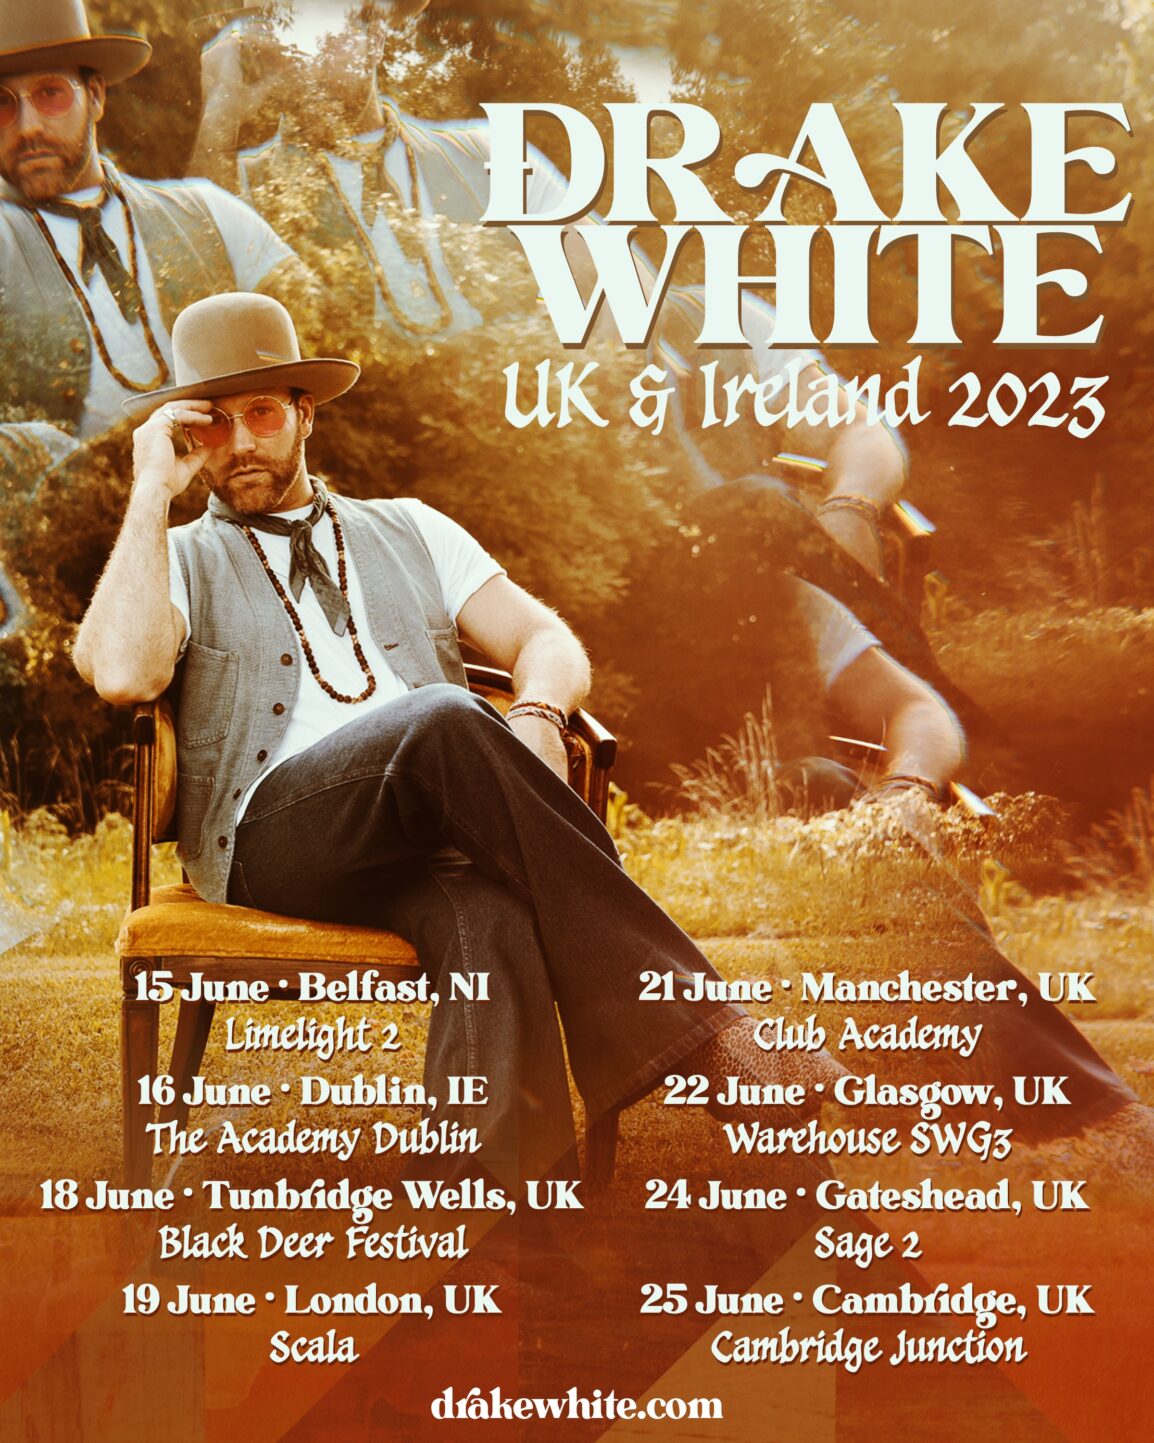 DRAKE WHITE ANNOUNCES UK AND IRELAND TOUR DATES FOR SUMMER 2023